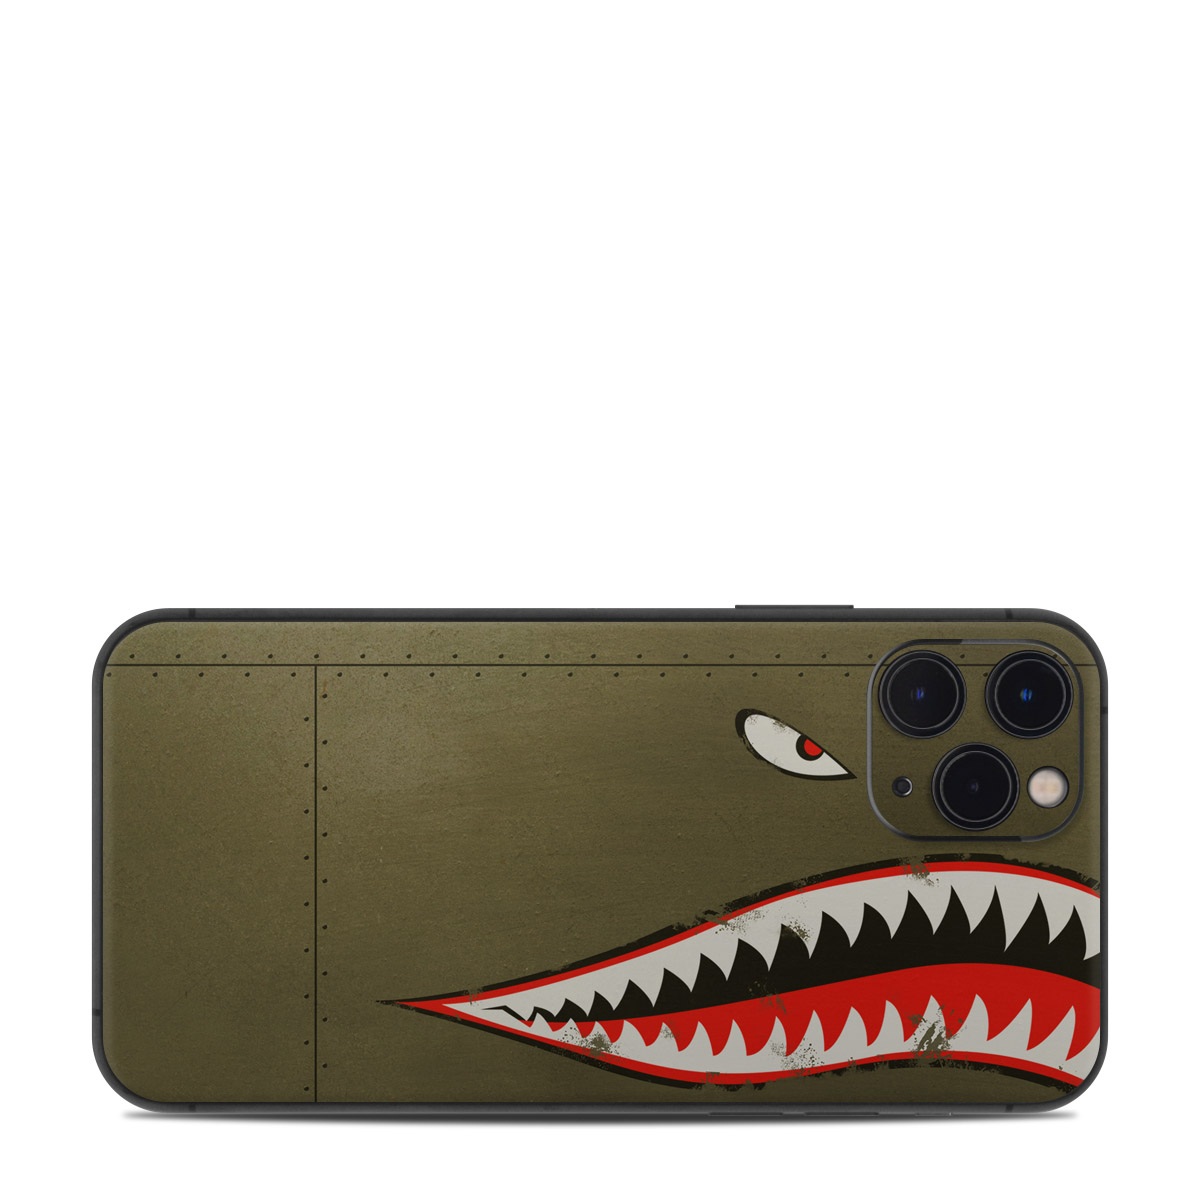 Apple iPhone 11 Pro Skin - USAF Shark (Image 1)